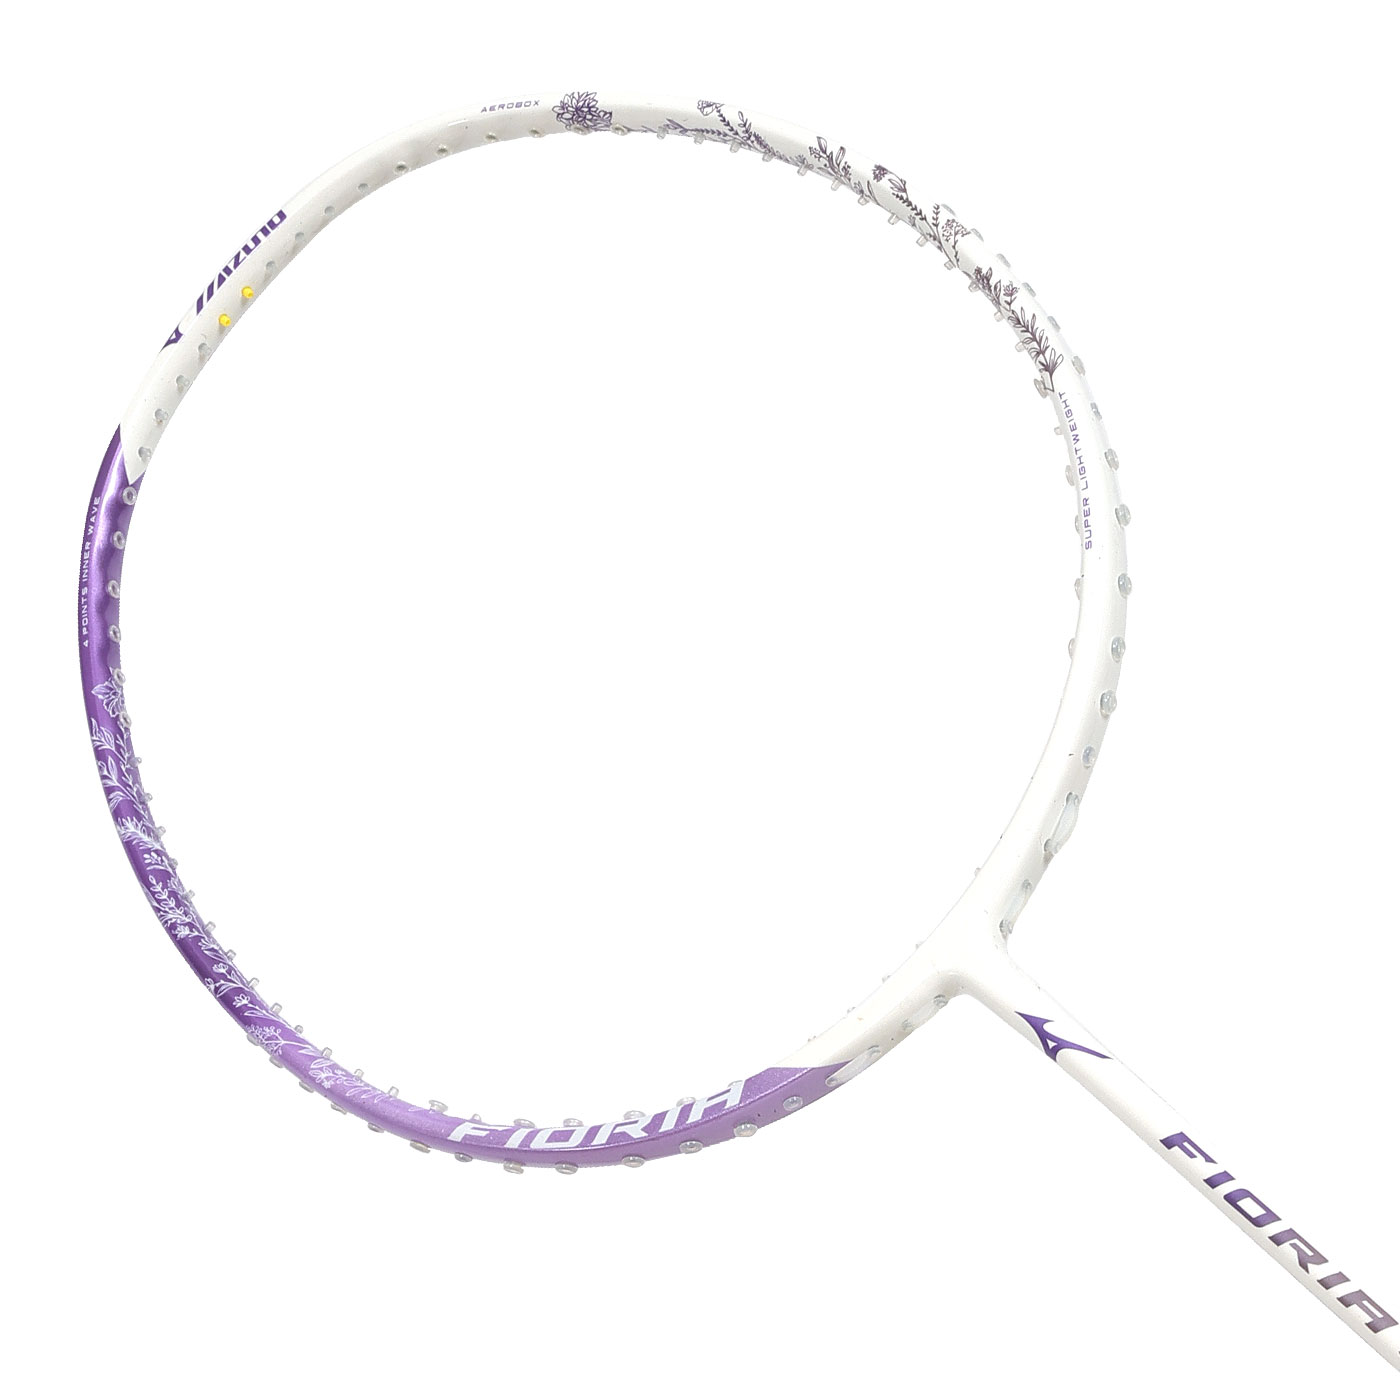 MIZUNO 羽球拍  73MTB42361 - 白紫